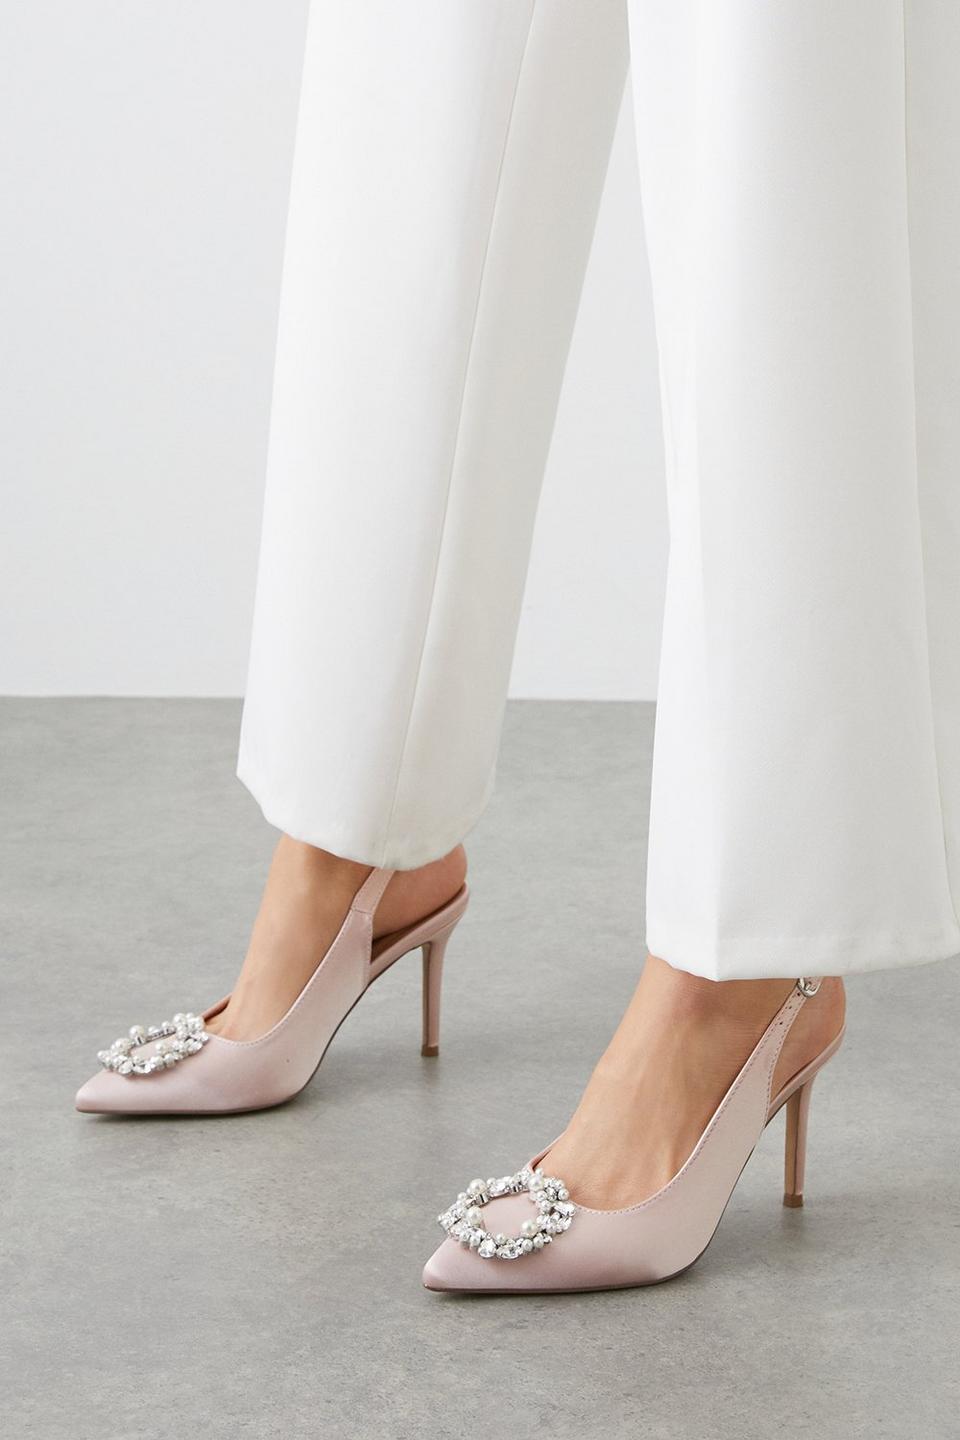 Heels | Caprice Jewel Broach Detail Slingback Stiletto Court Shoes | Wallis